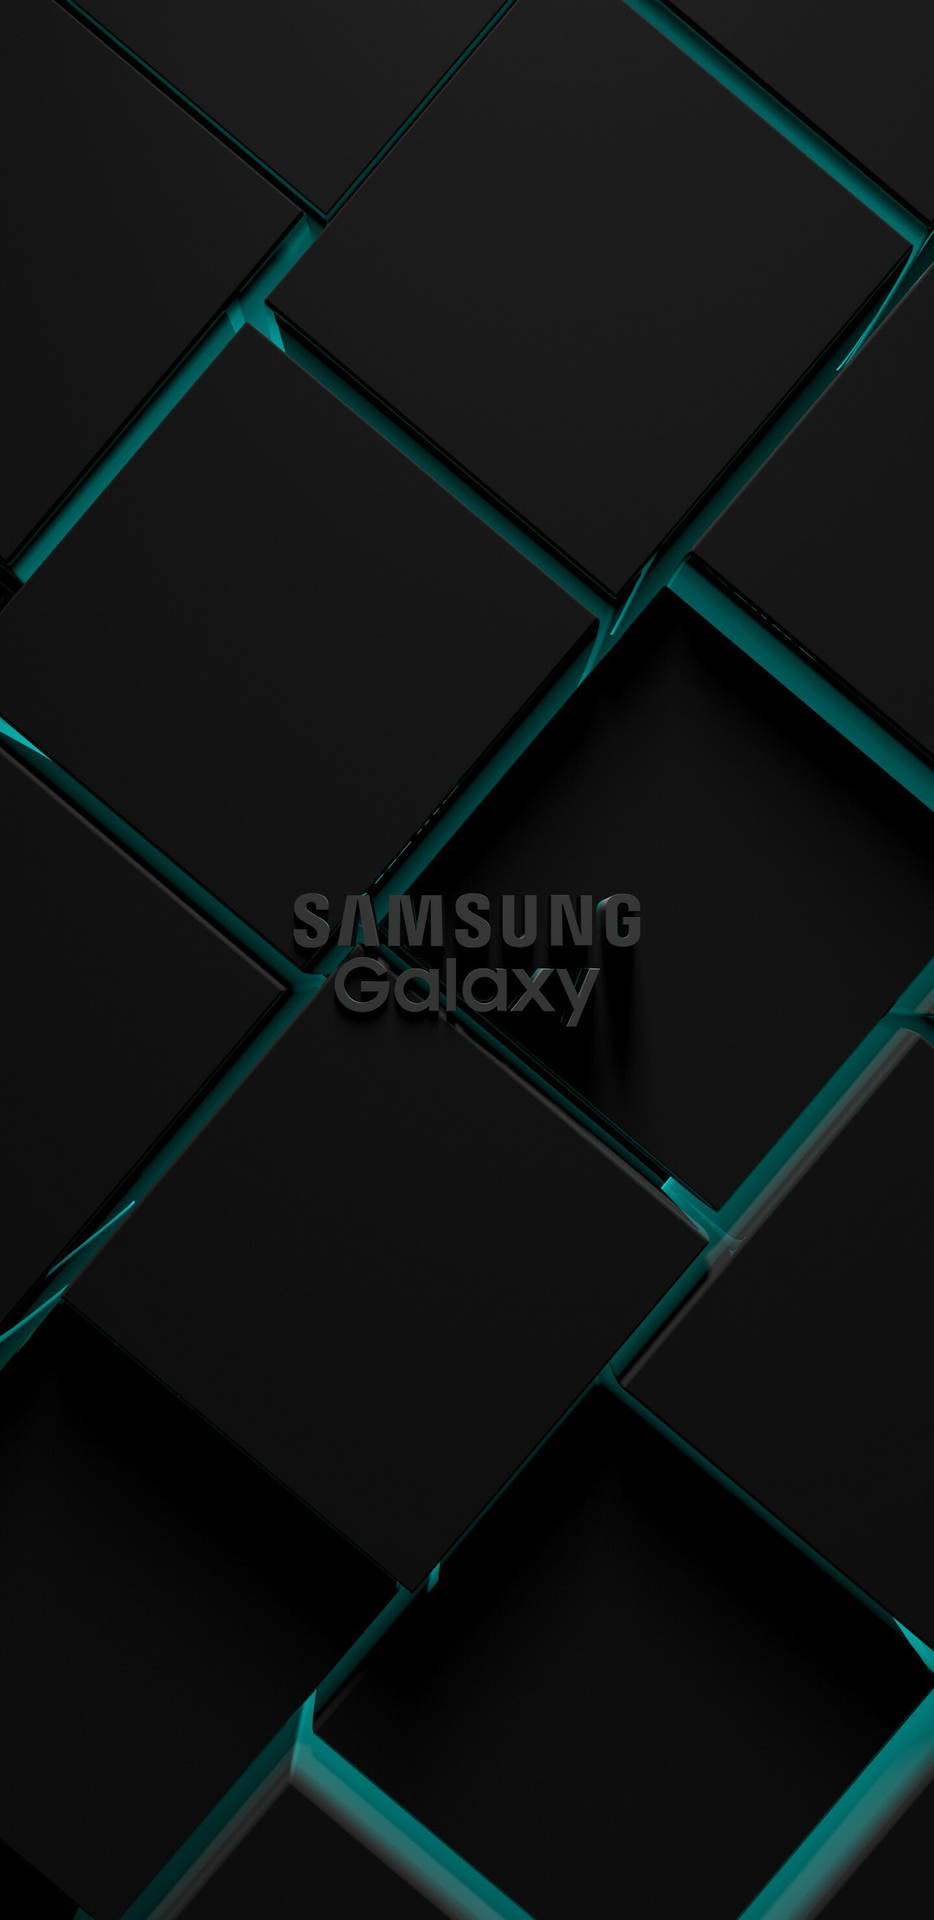 Samsung Galaxy 4k Logo Sort Kubiske Former Wallpaper